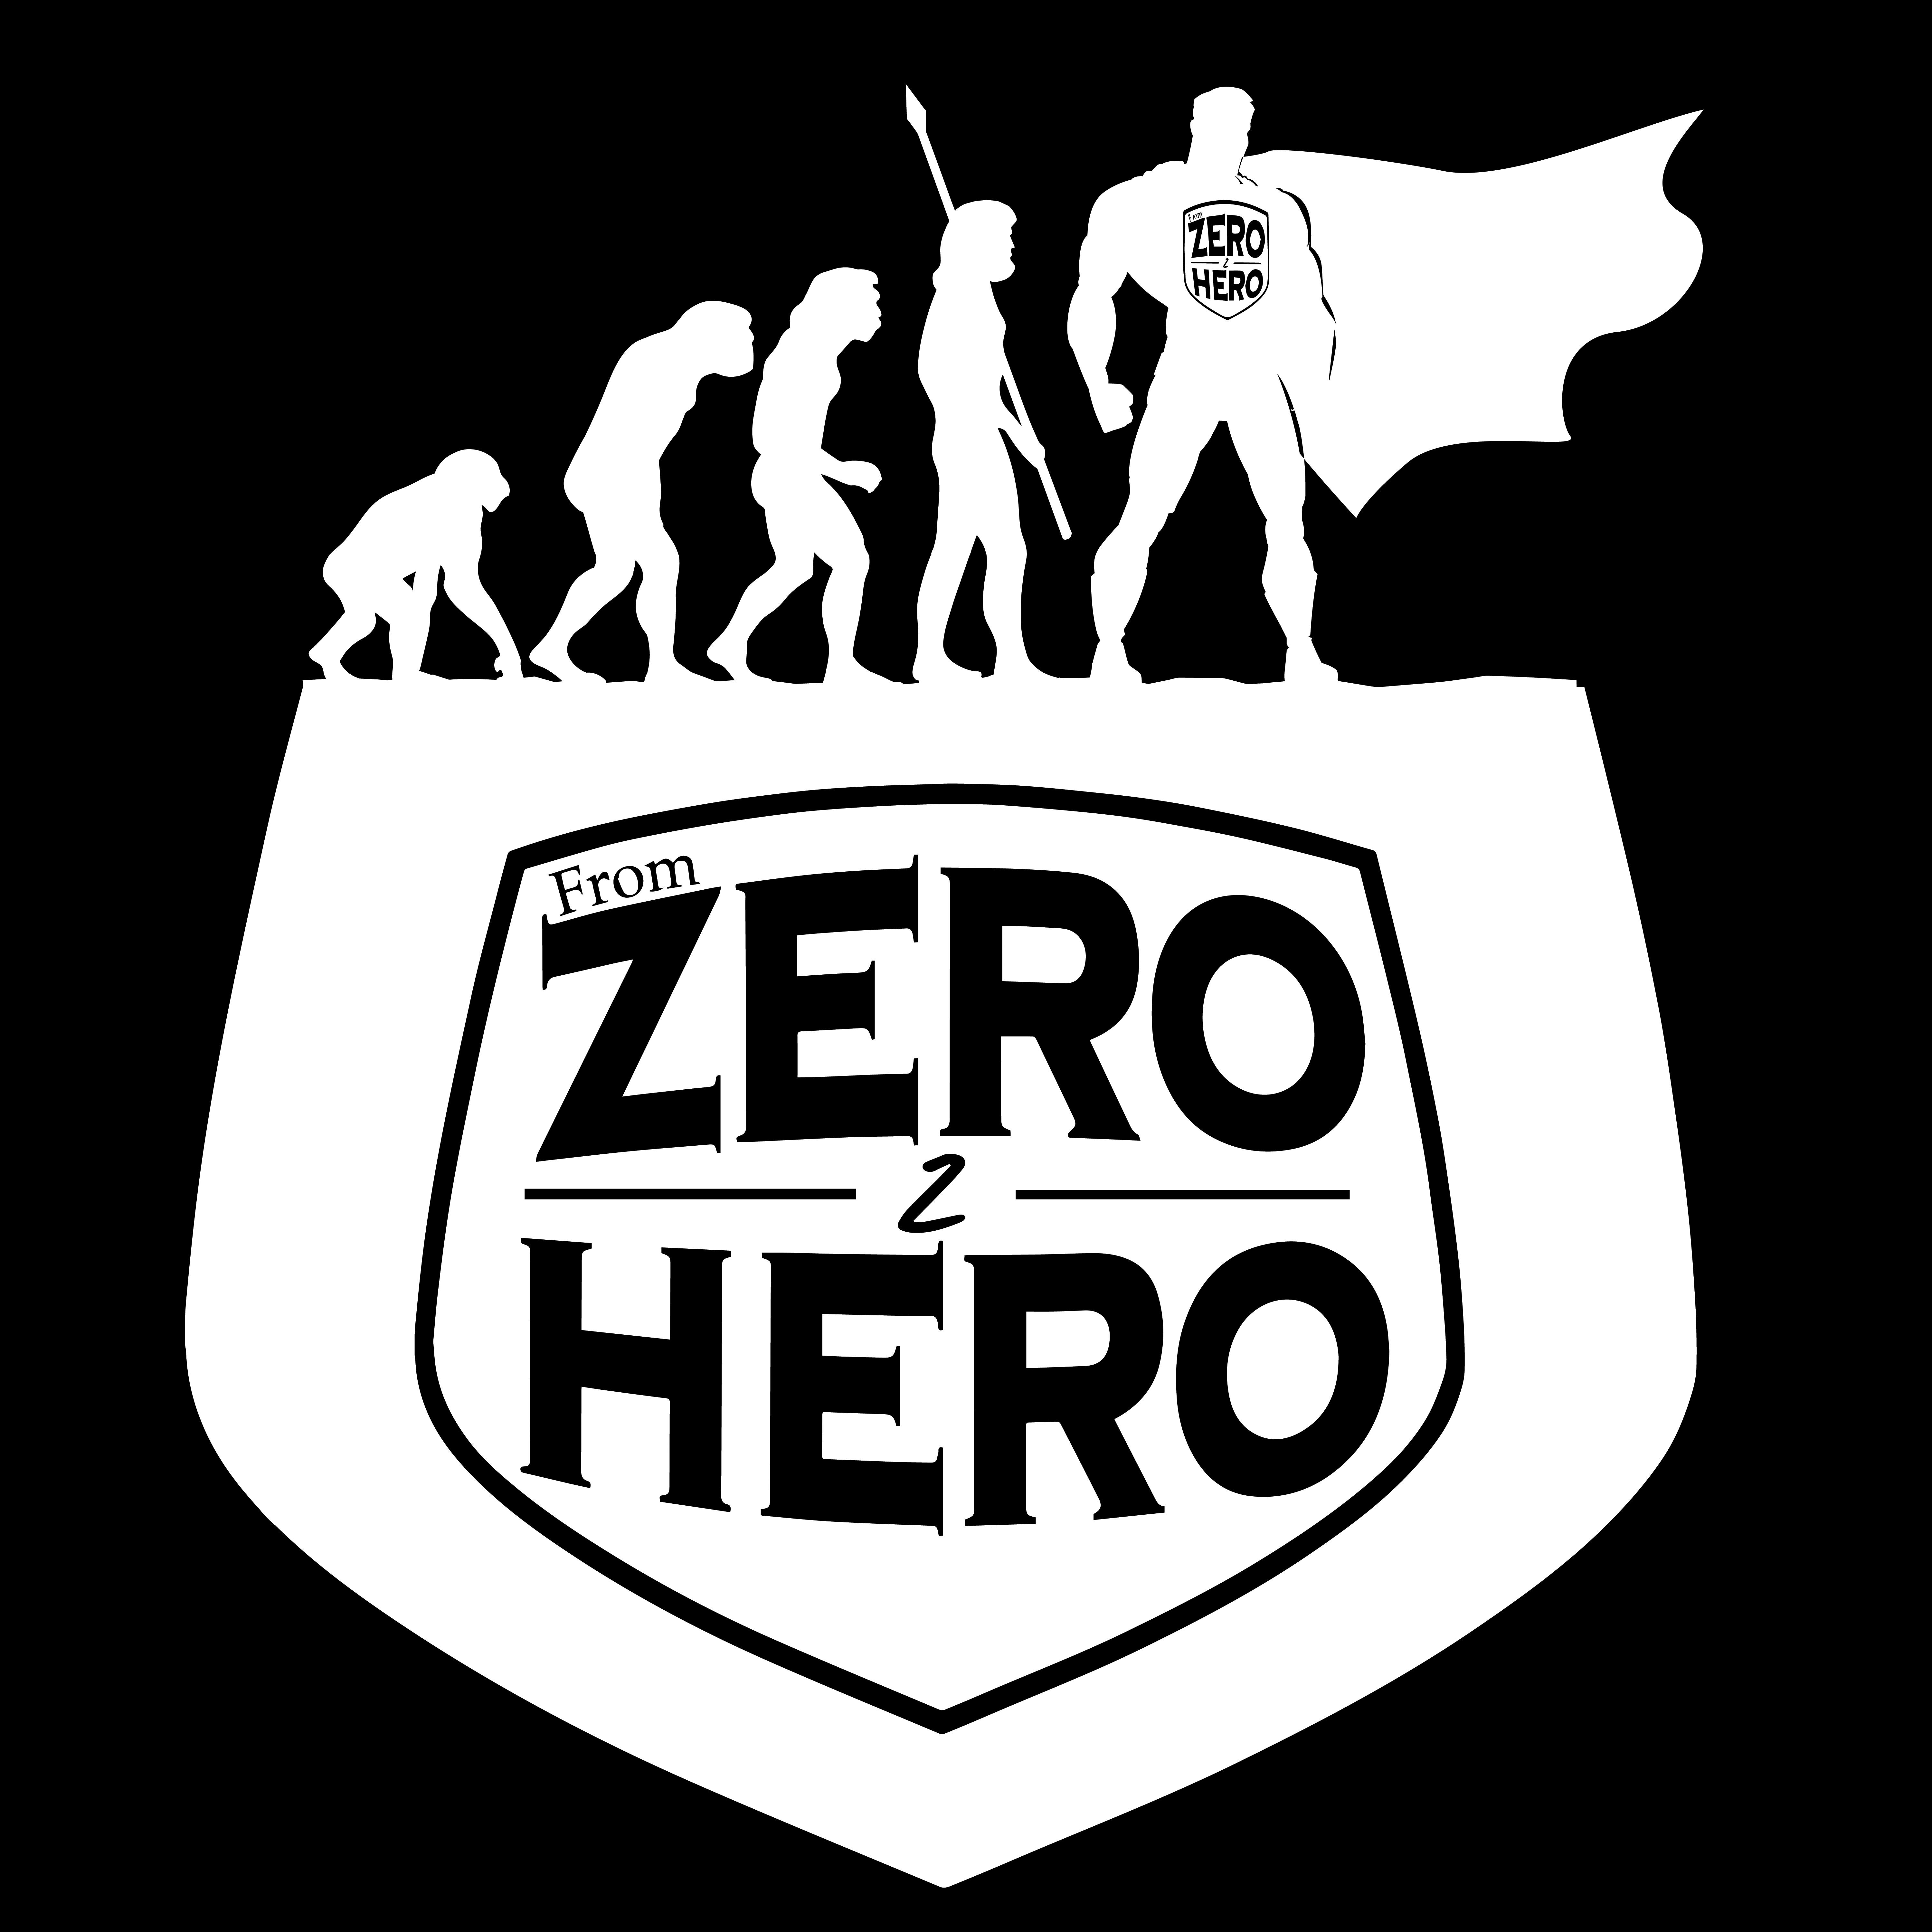 Urban Zero Hero